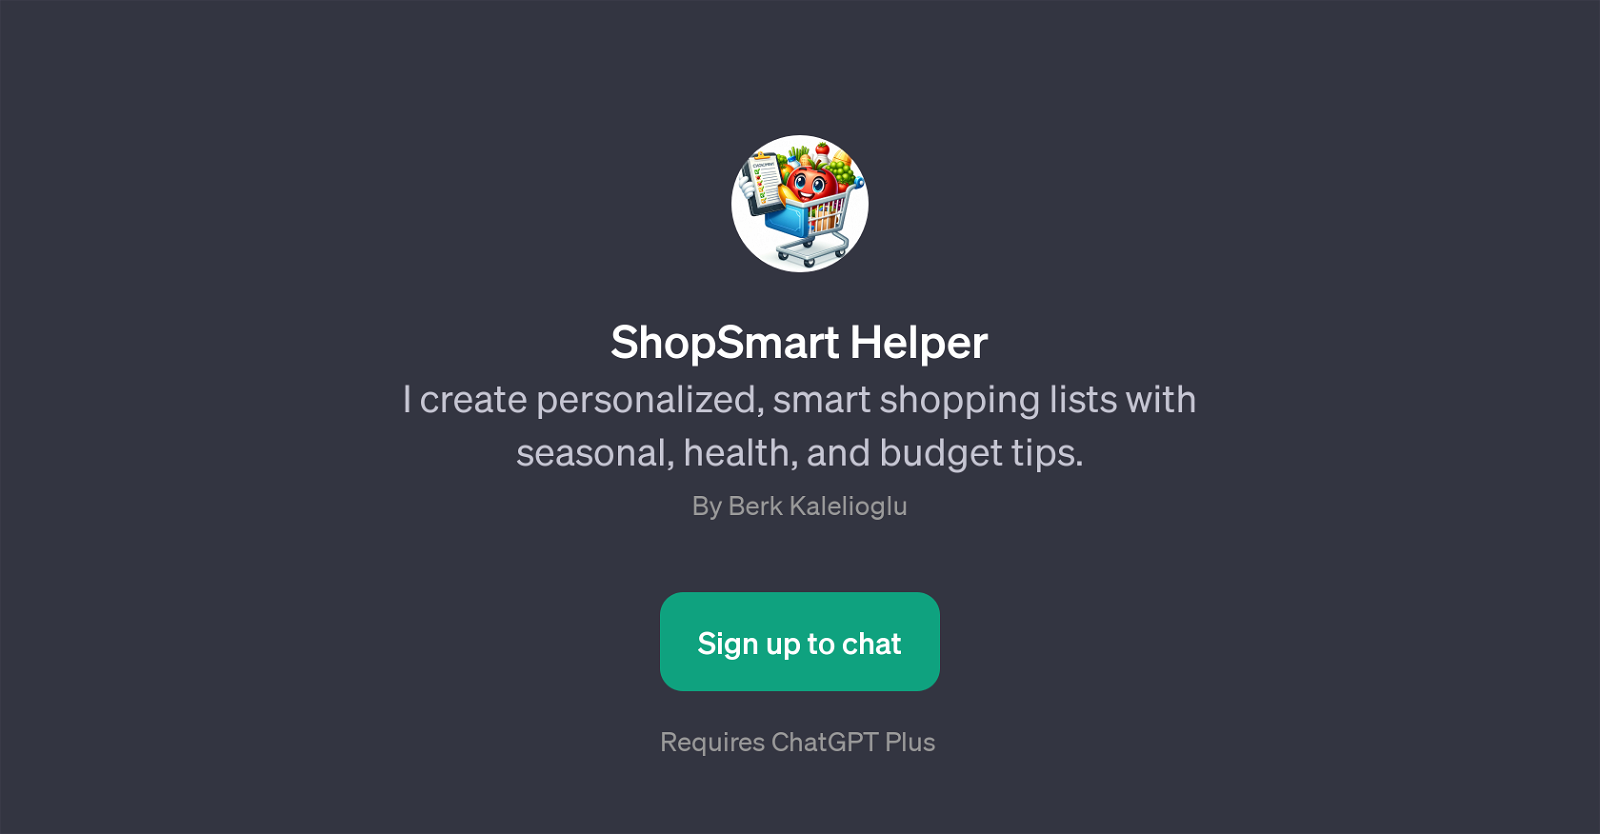 ShopSmart Helper website